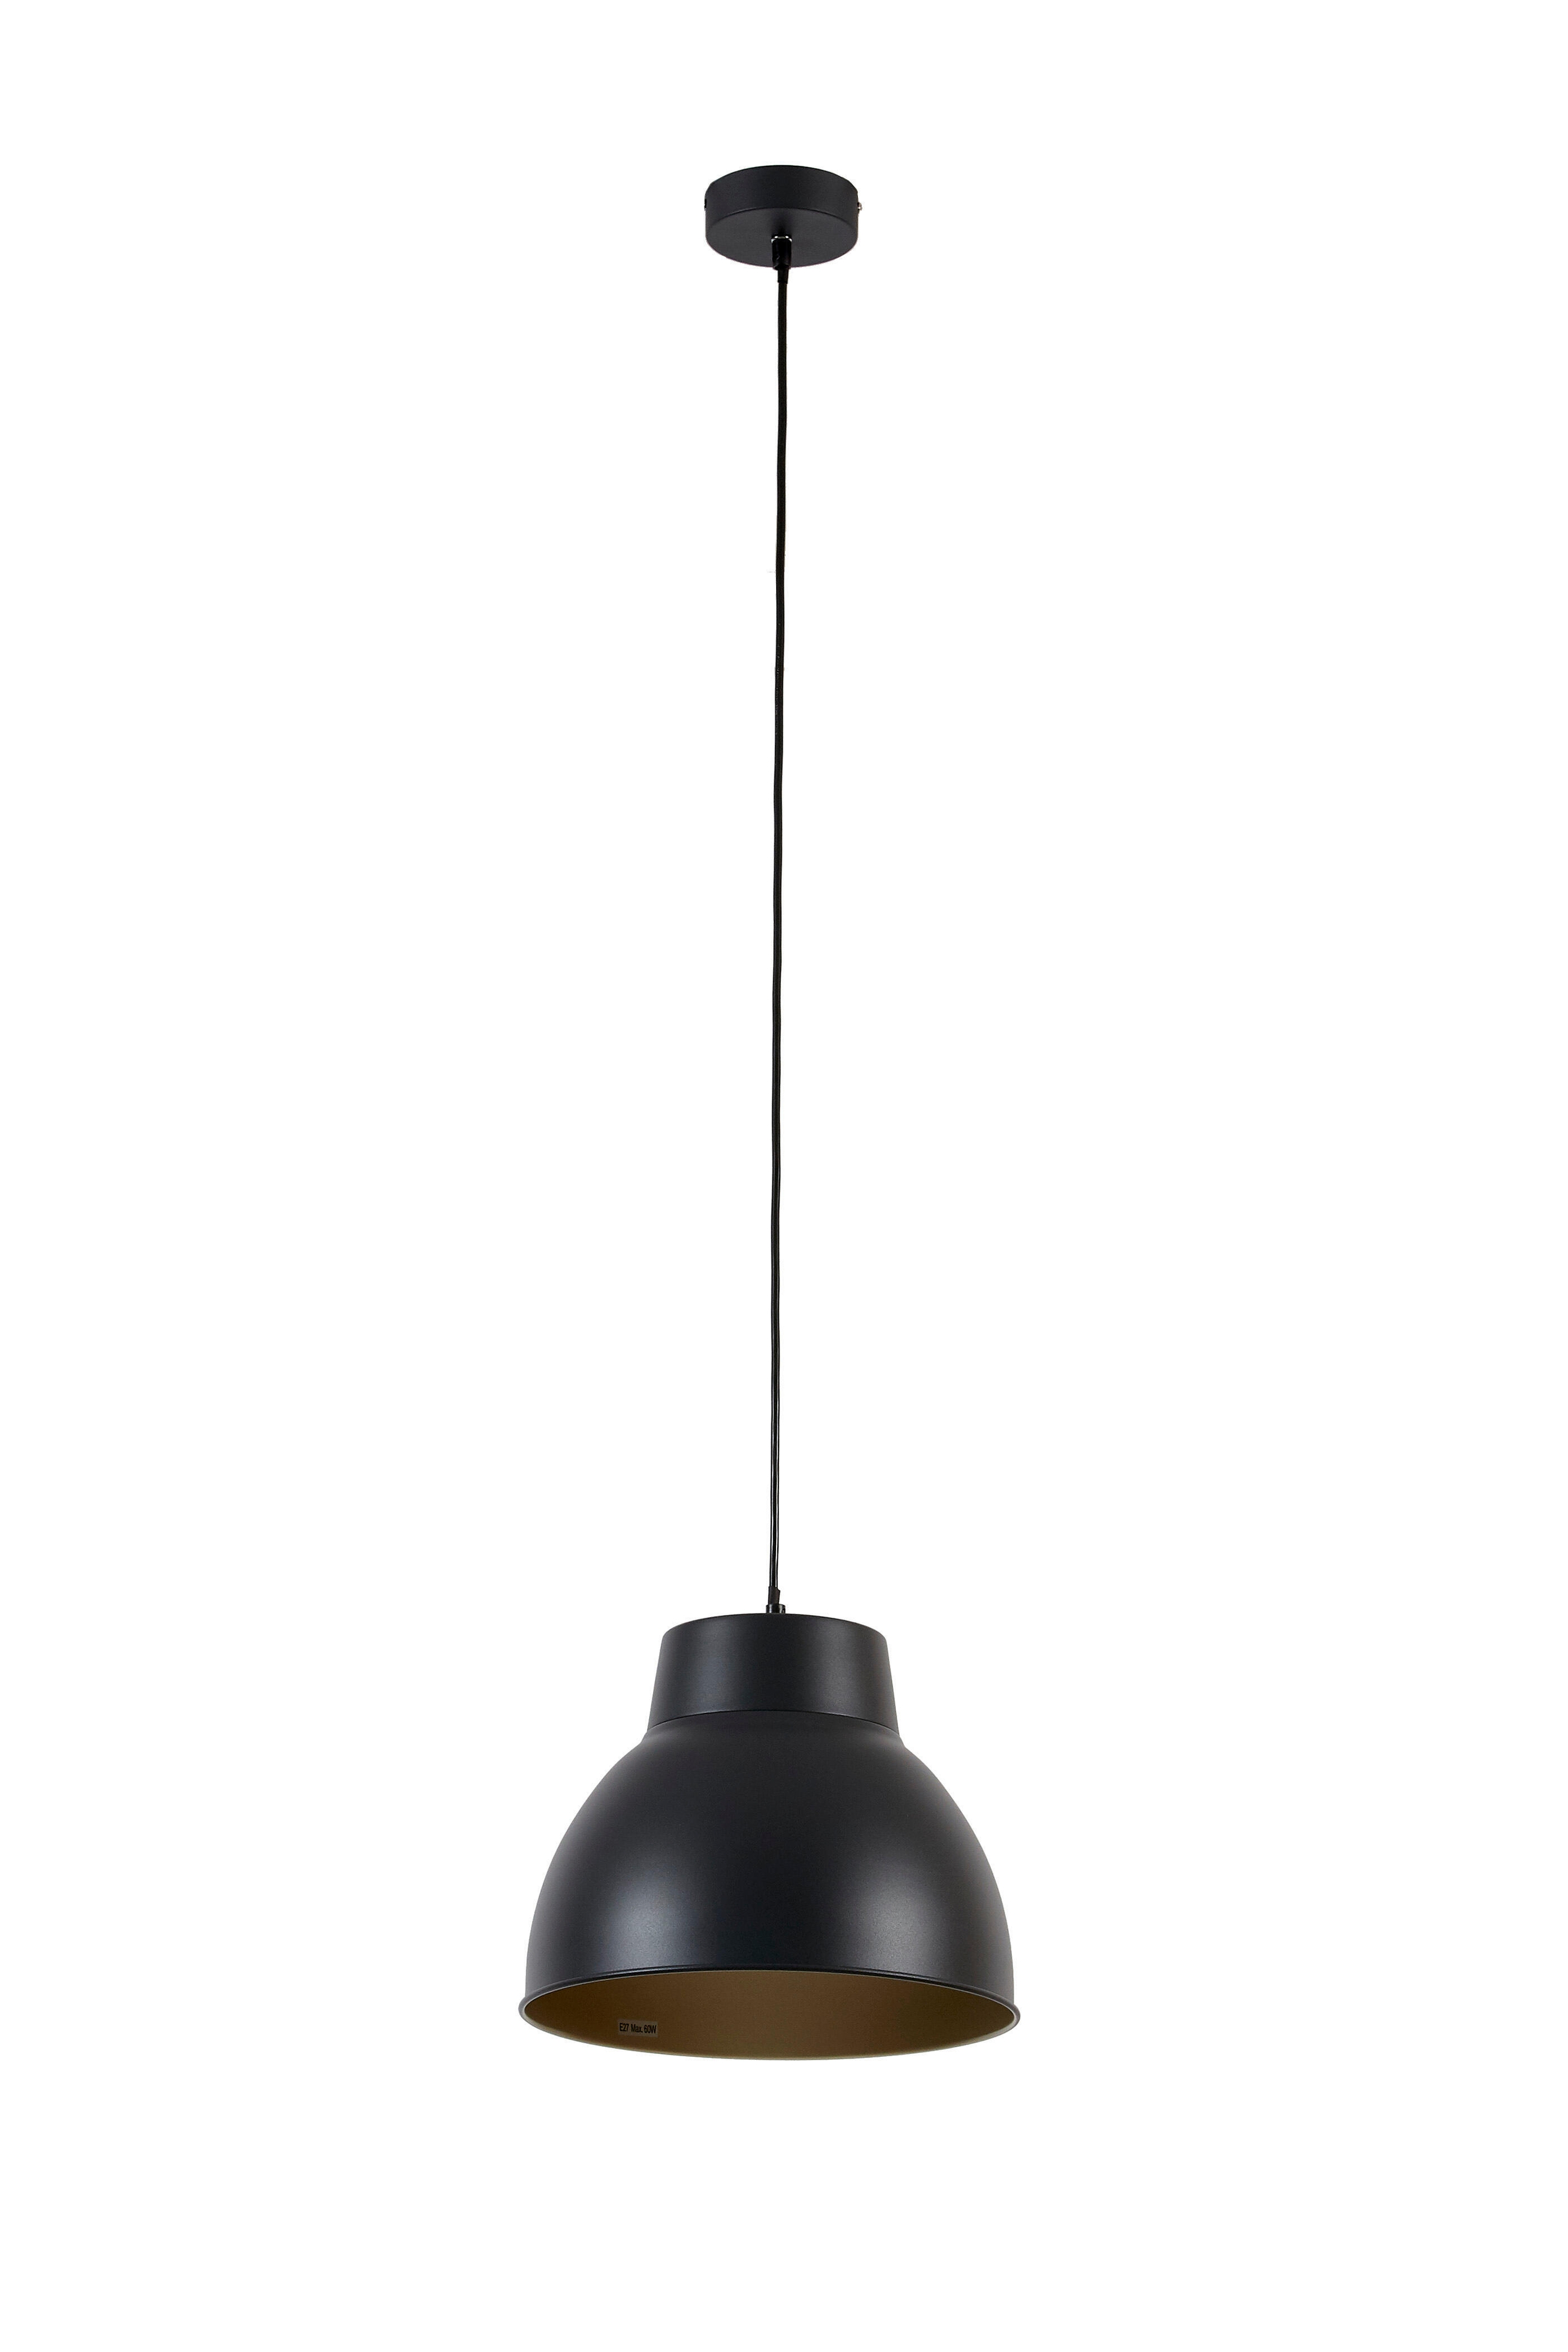 Lampadario Industriale Mezzo nero in metallo, D. 31 cm, INSPIRE - 5